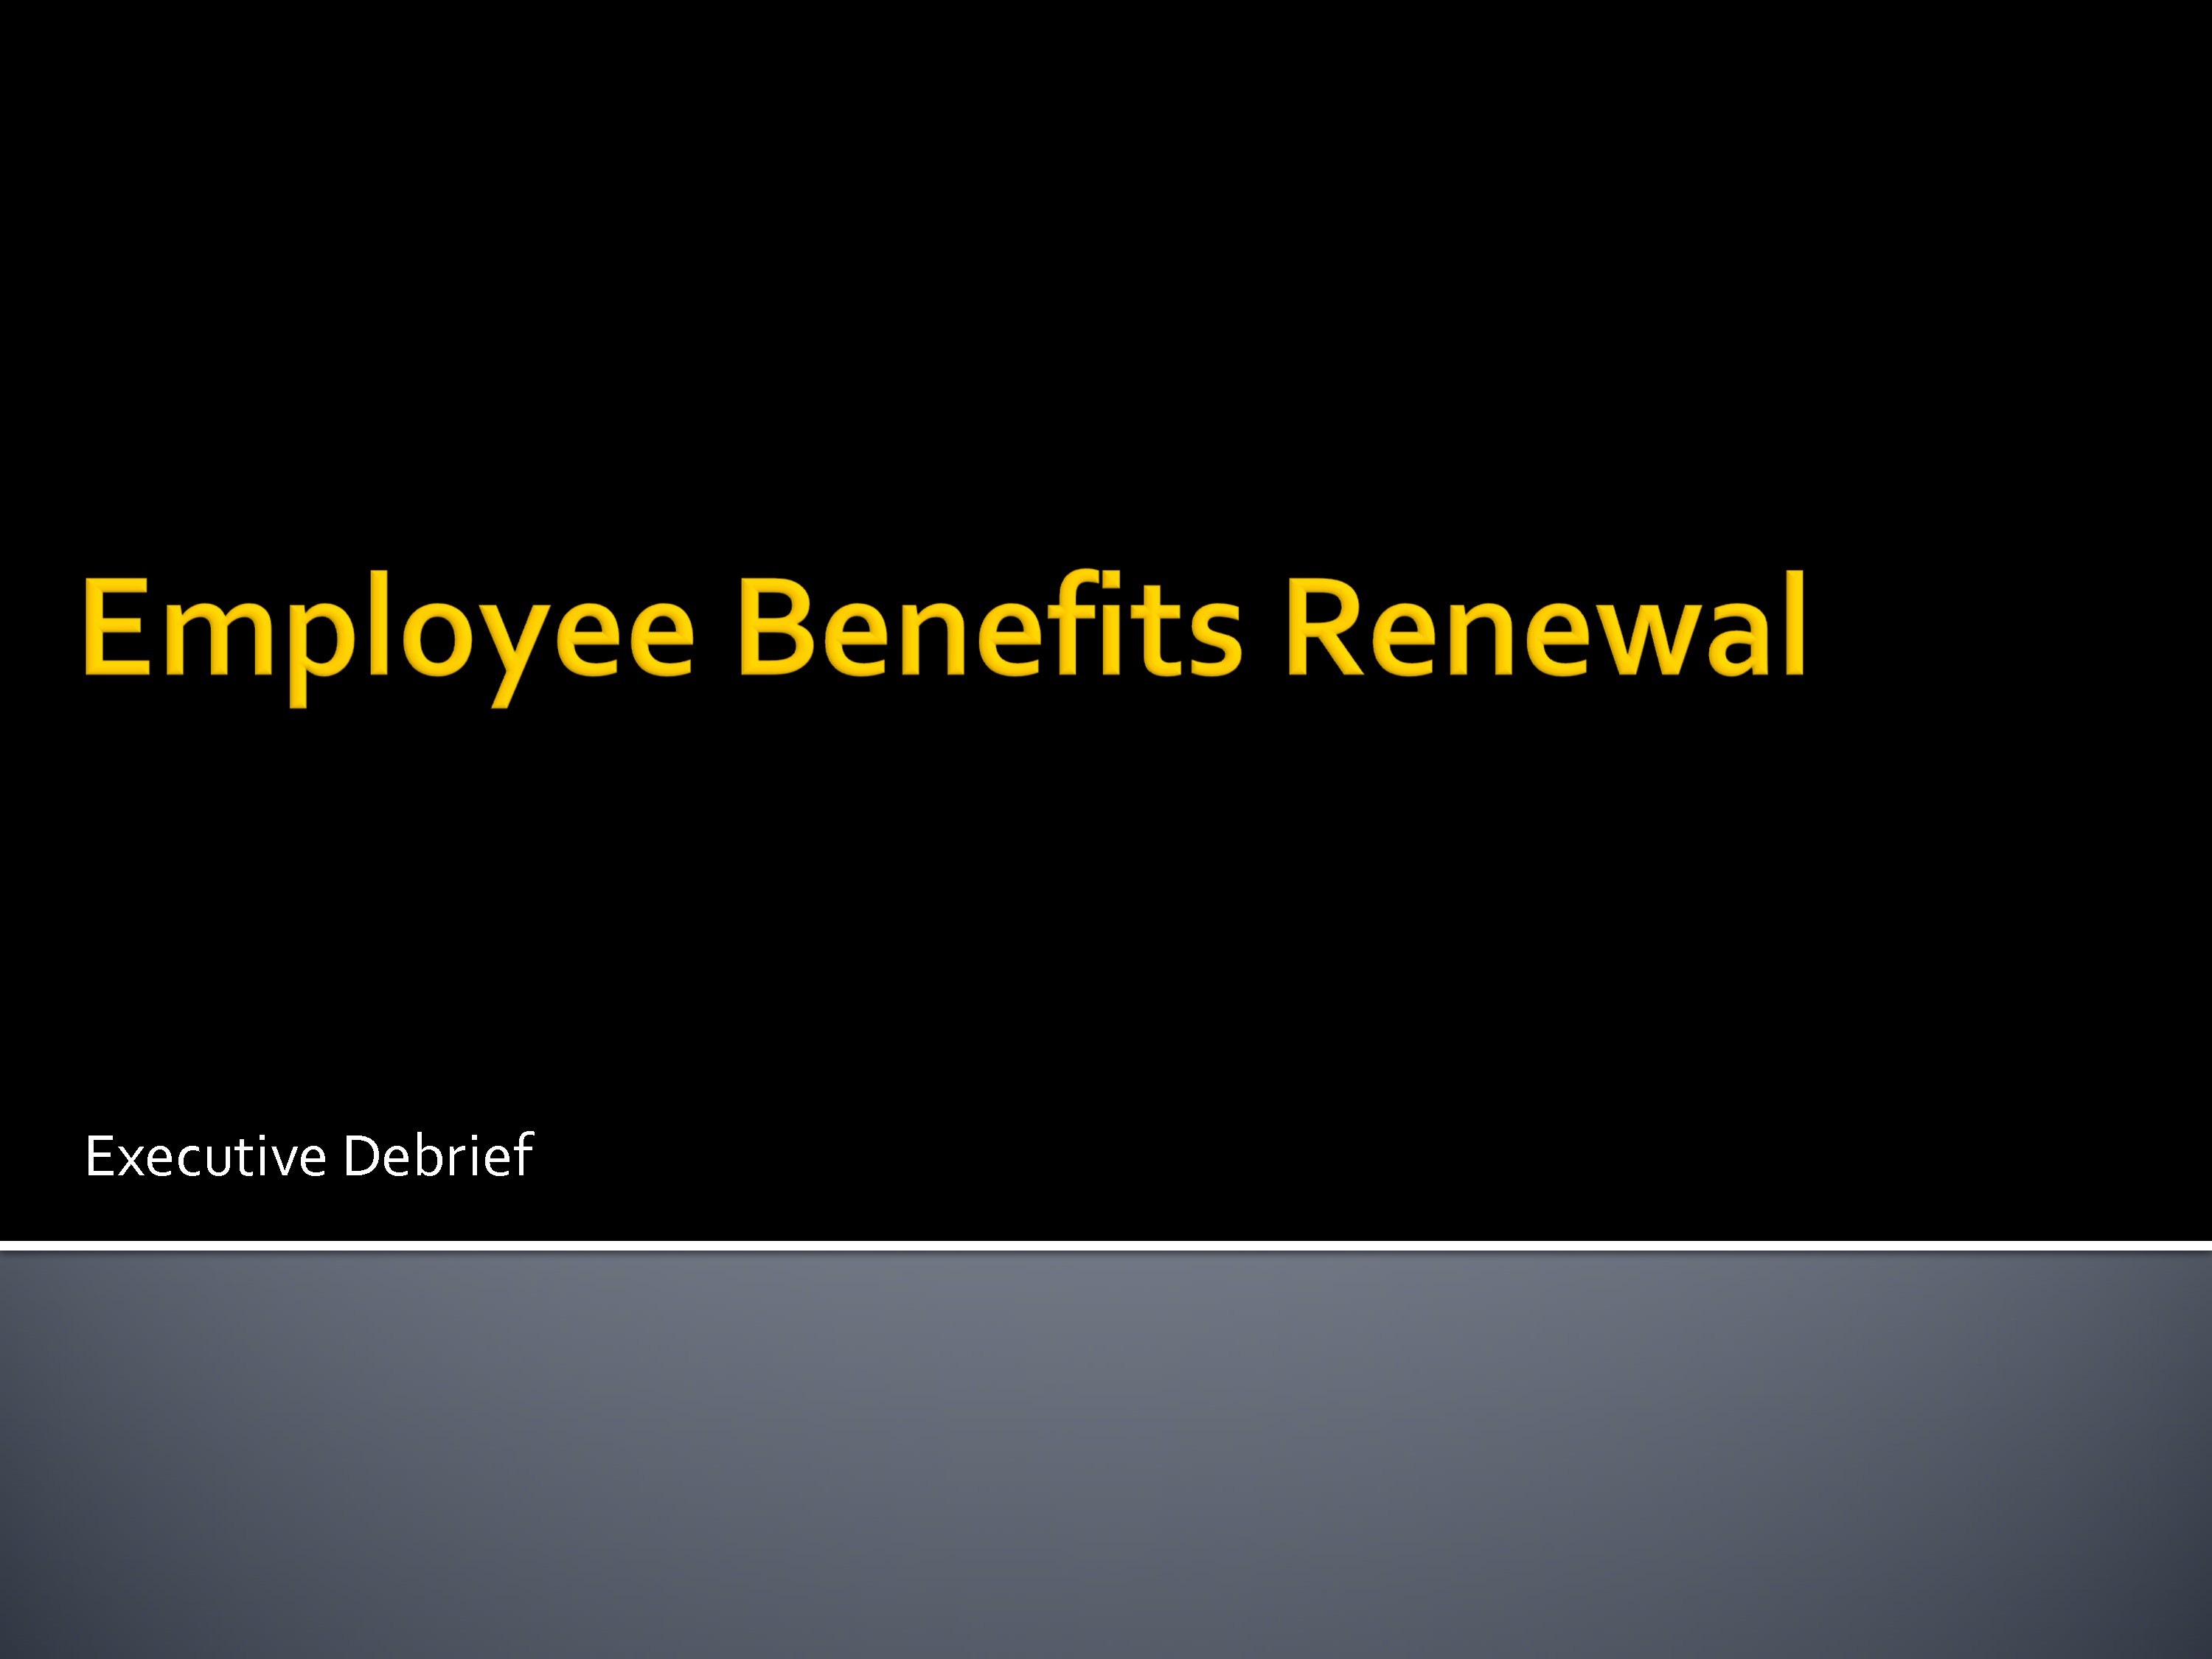 Employee Benefits Renewal - Executive Debrief